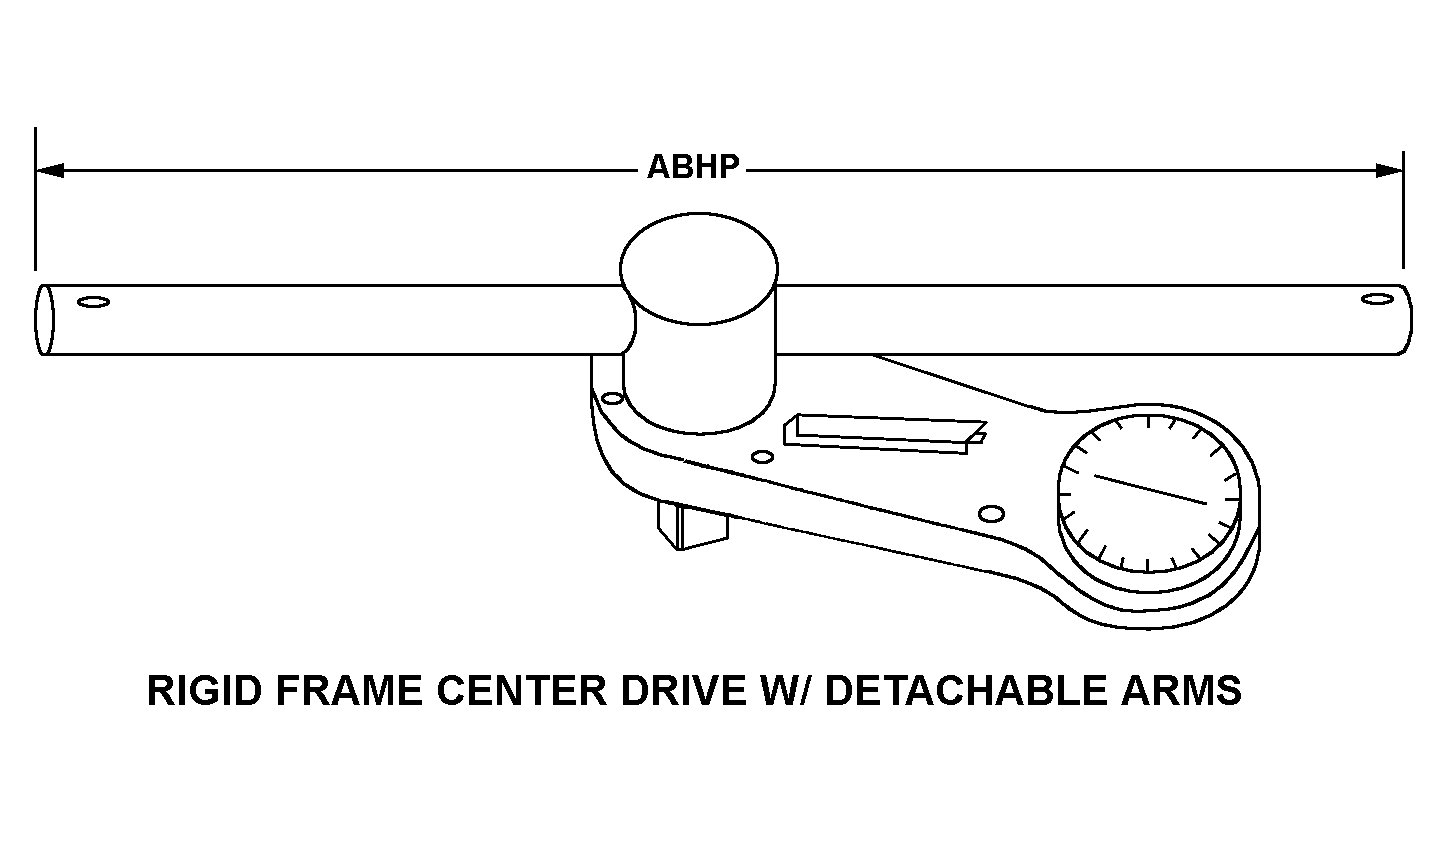 RIGID FRAME CENTER DRIVE W/DETACHABLE ARMS style nsn 5120-01-399-9004